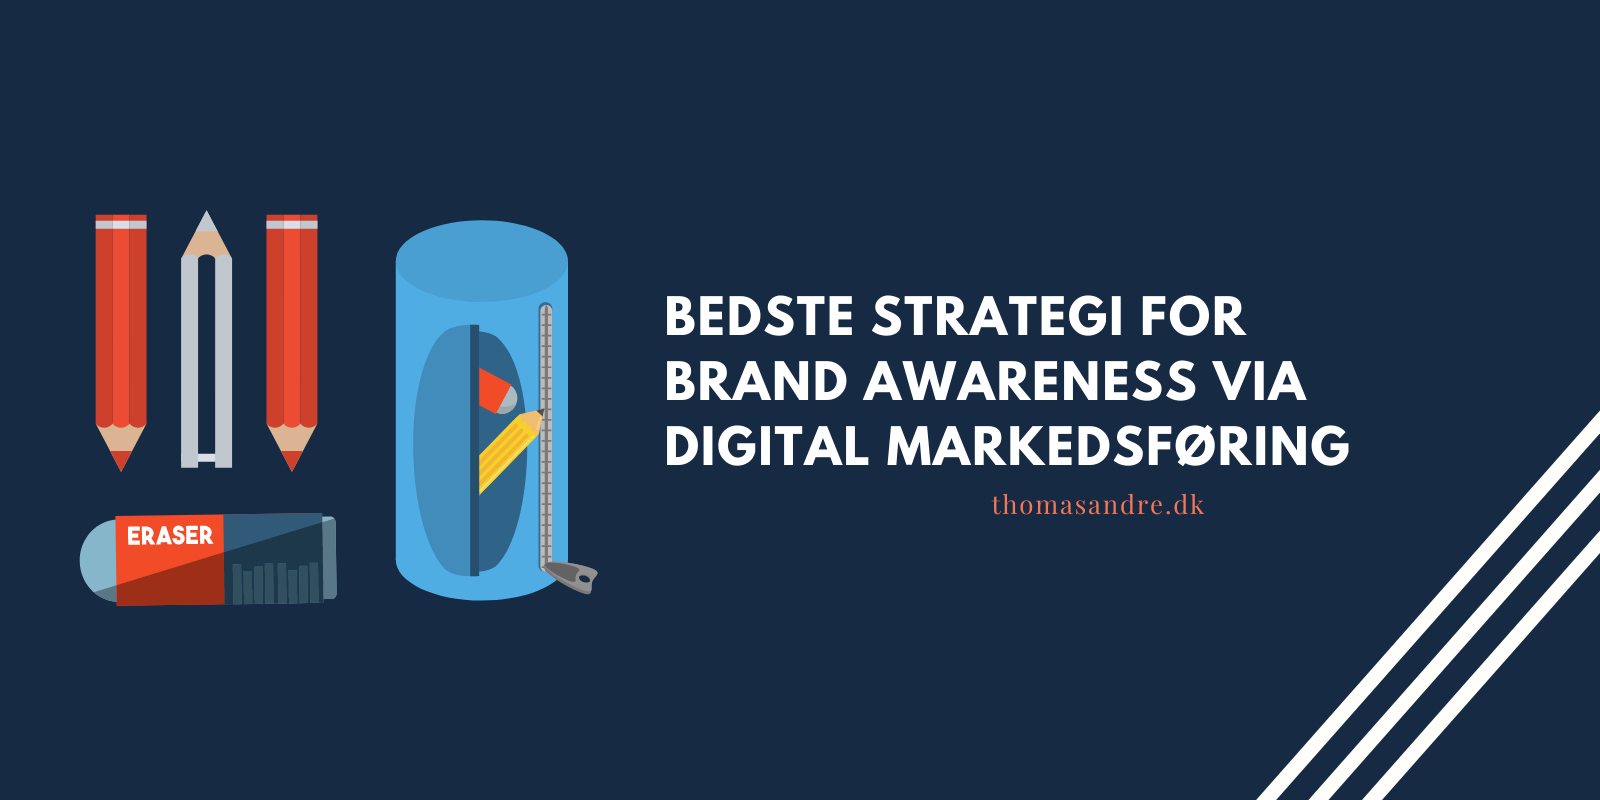 Bedste strategi for brand awareness